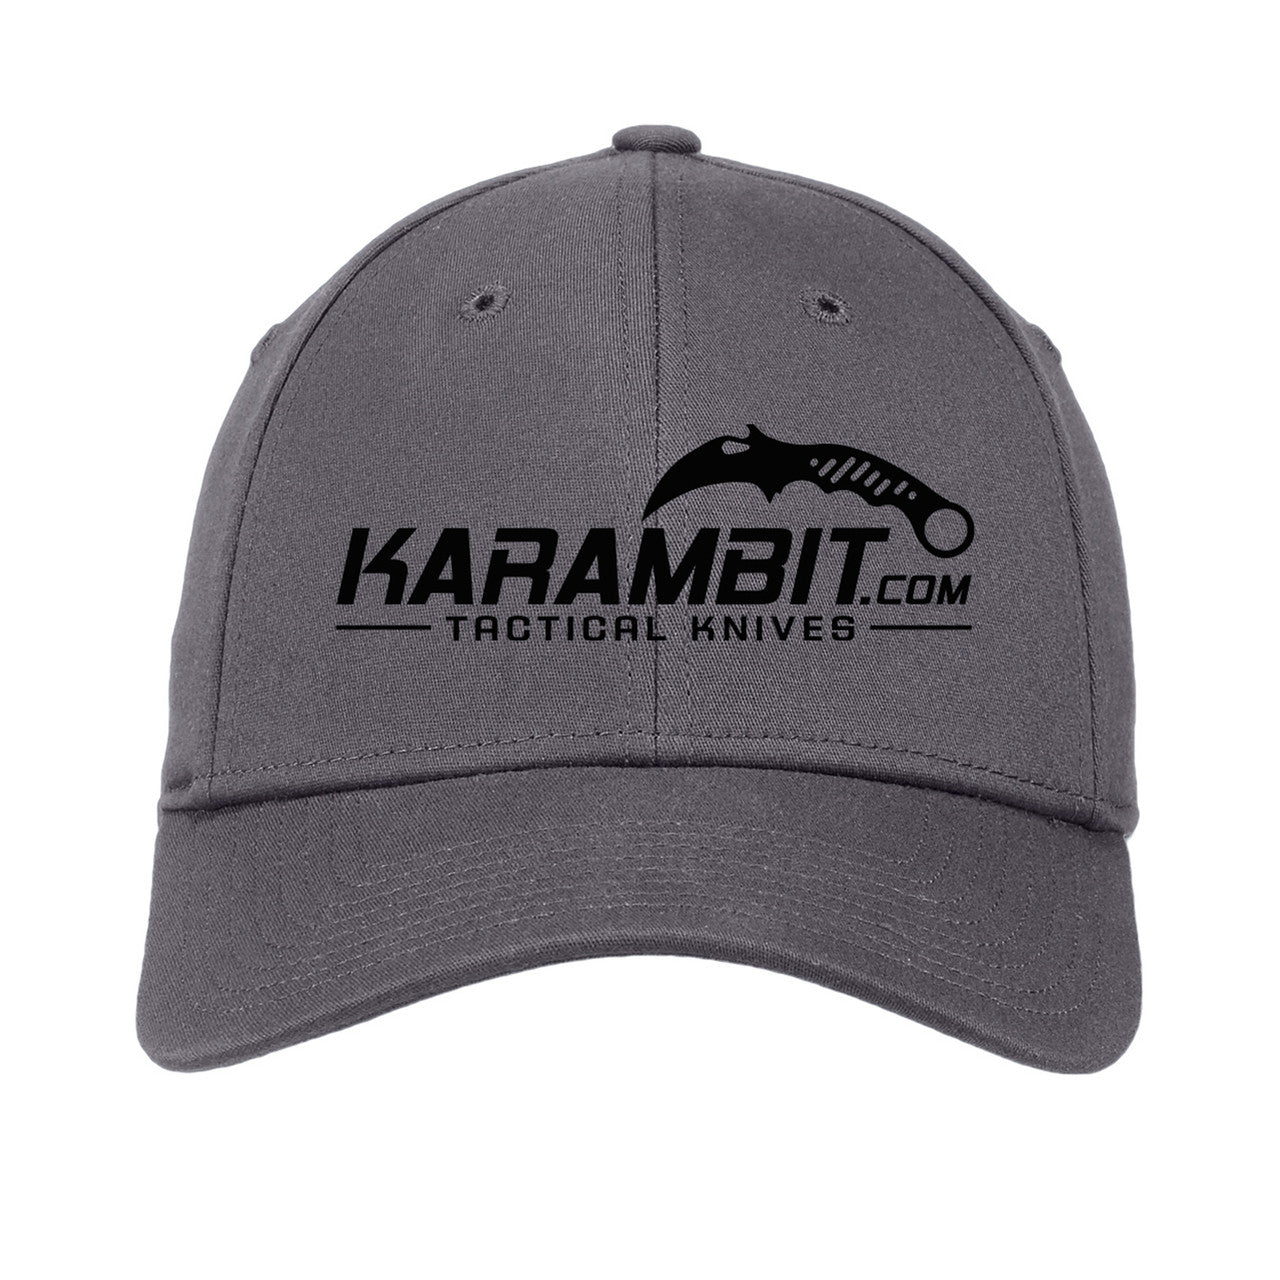 Karambit.com New Era® - Structured Stretch Cotton Hat - Graphite - front view. (KbitHat-GRAPHITE)